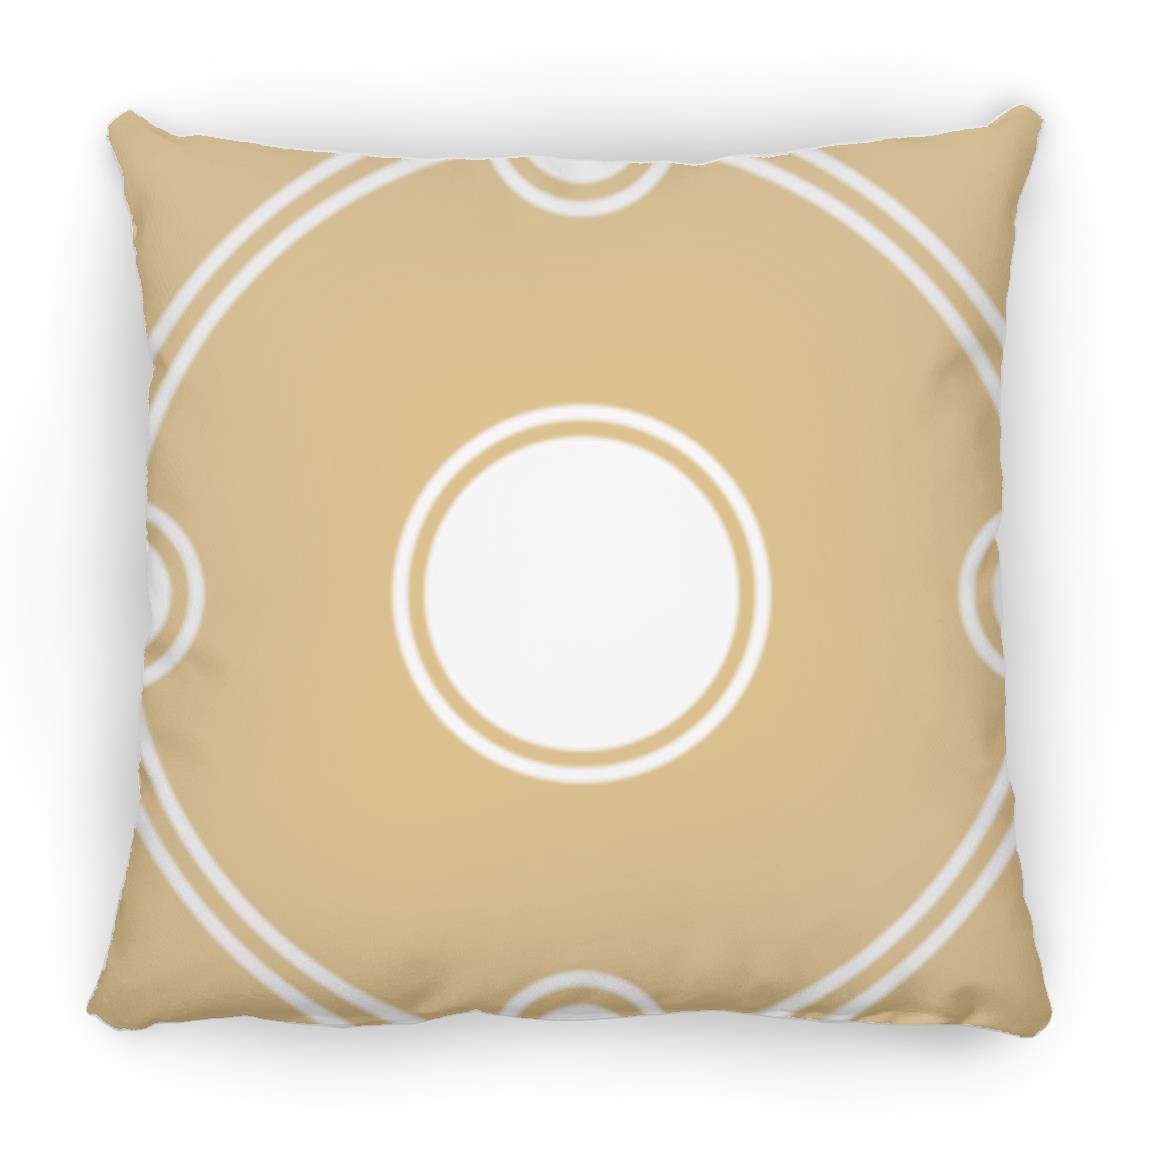 Crop Circle Pillow - Potterne - Shapes of Wisdom